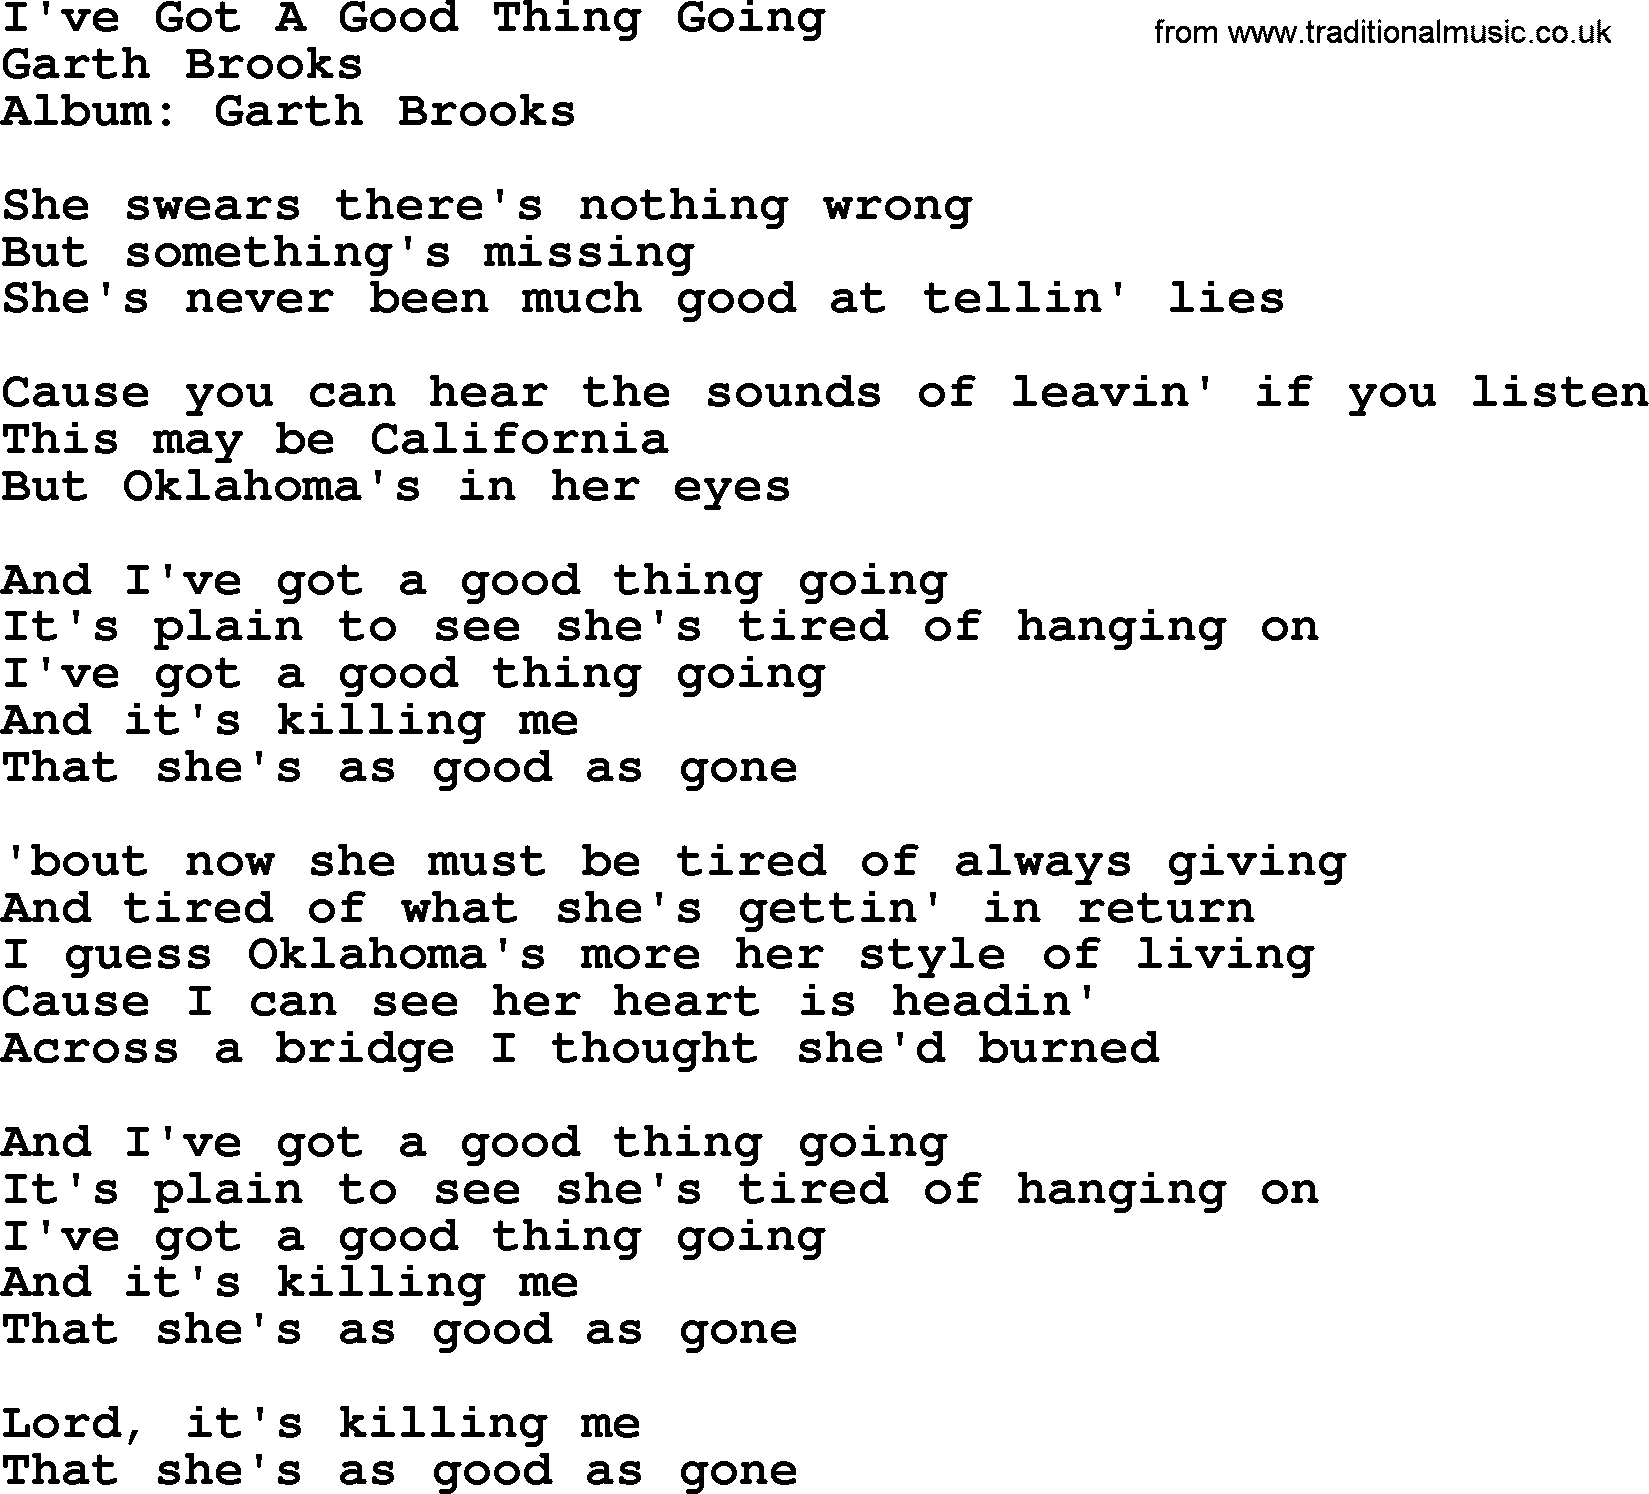 Garth Brooks song: I've Got A Good Thing Going, lyrics